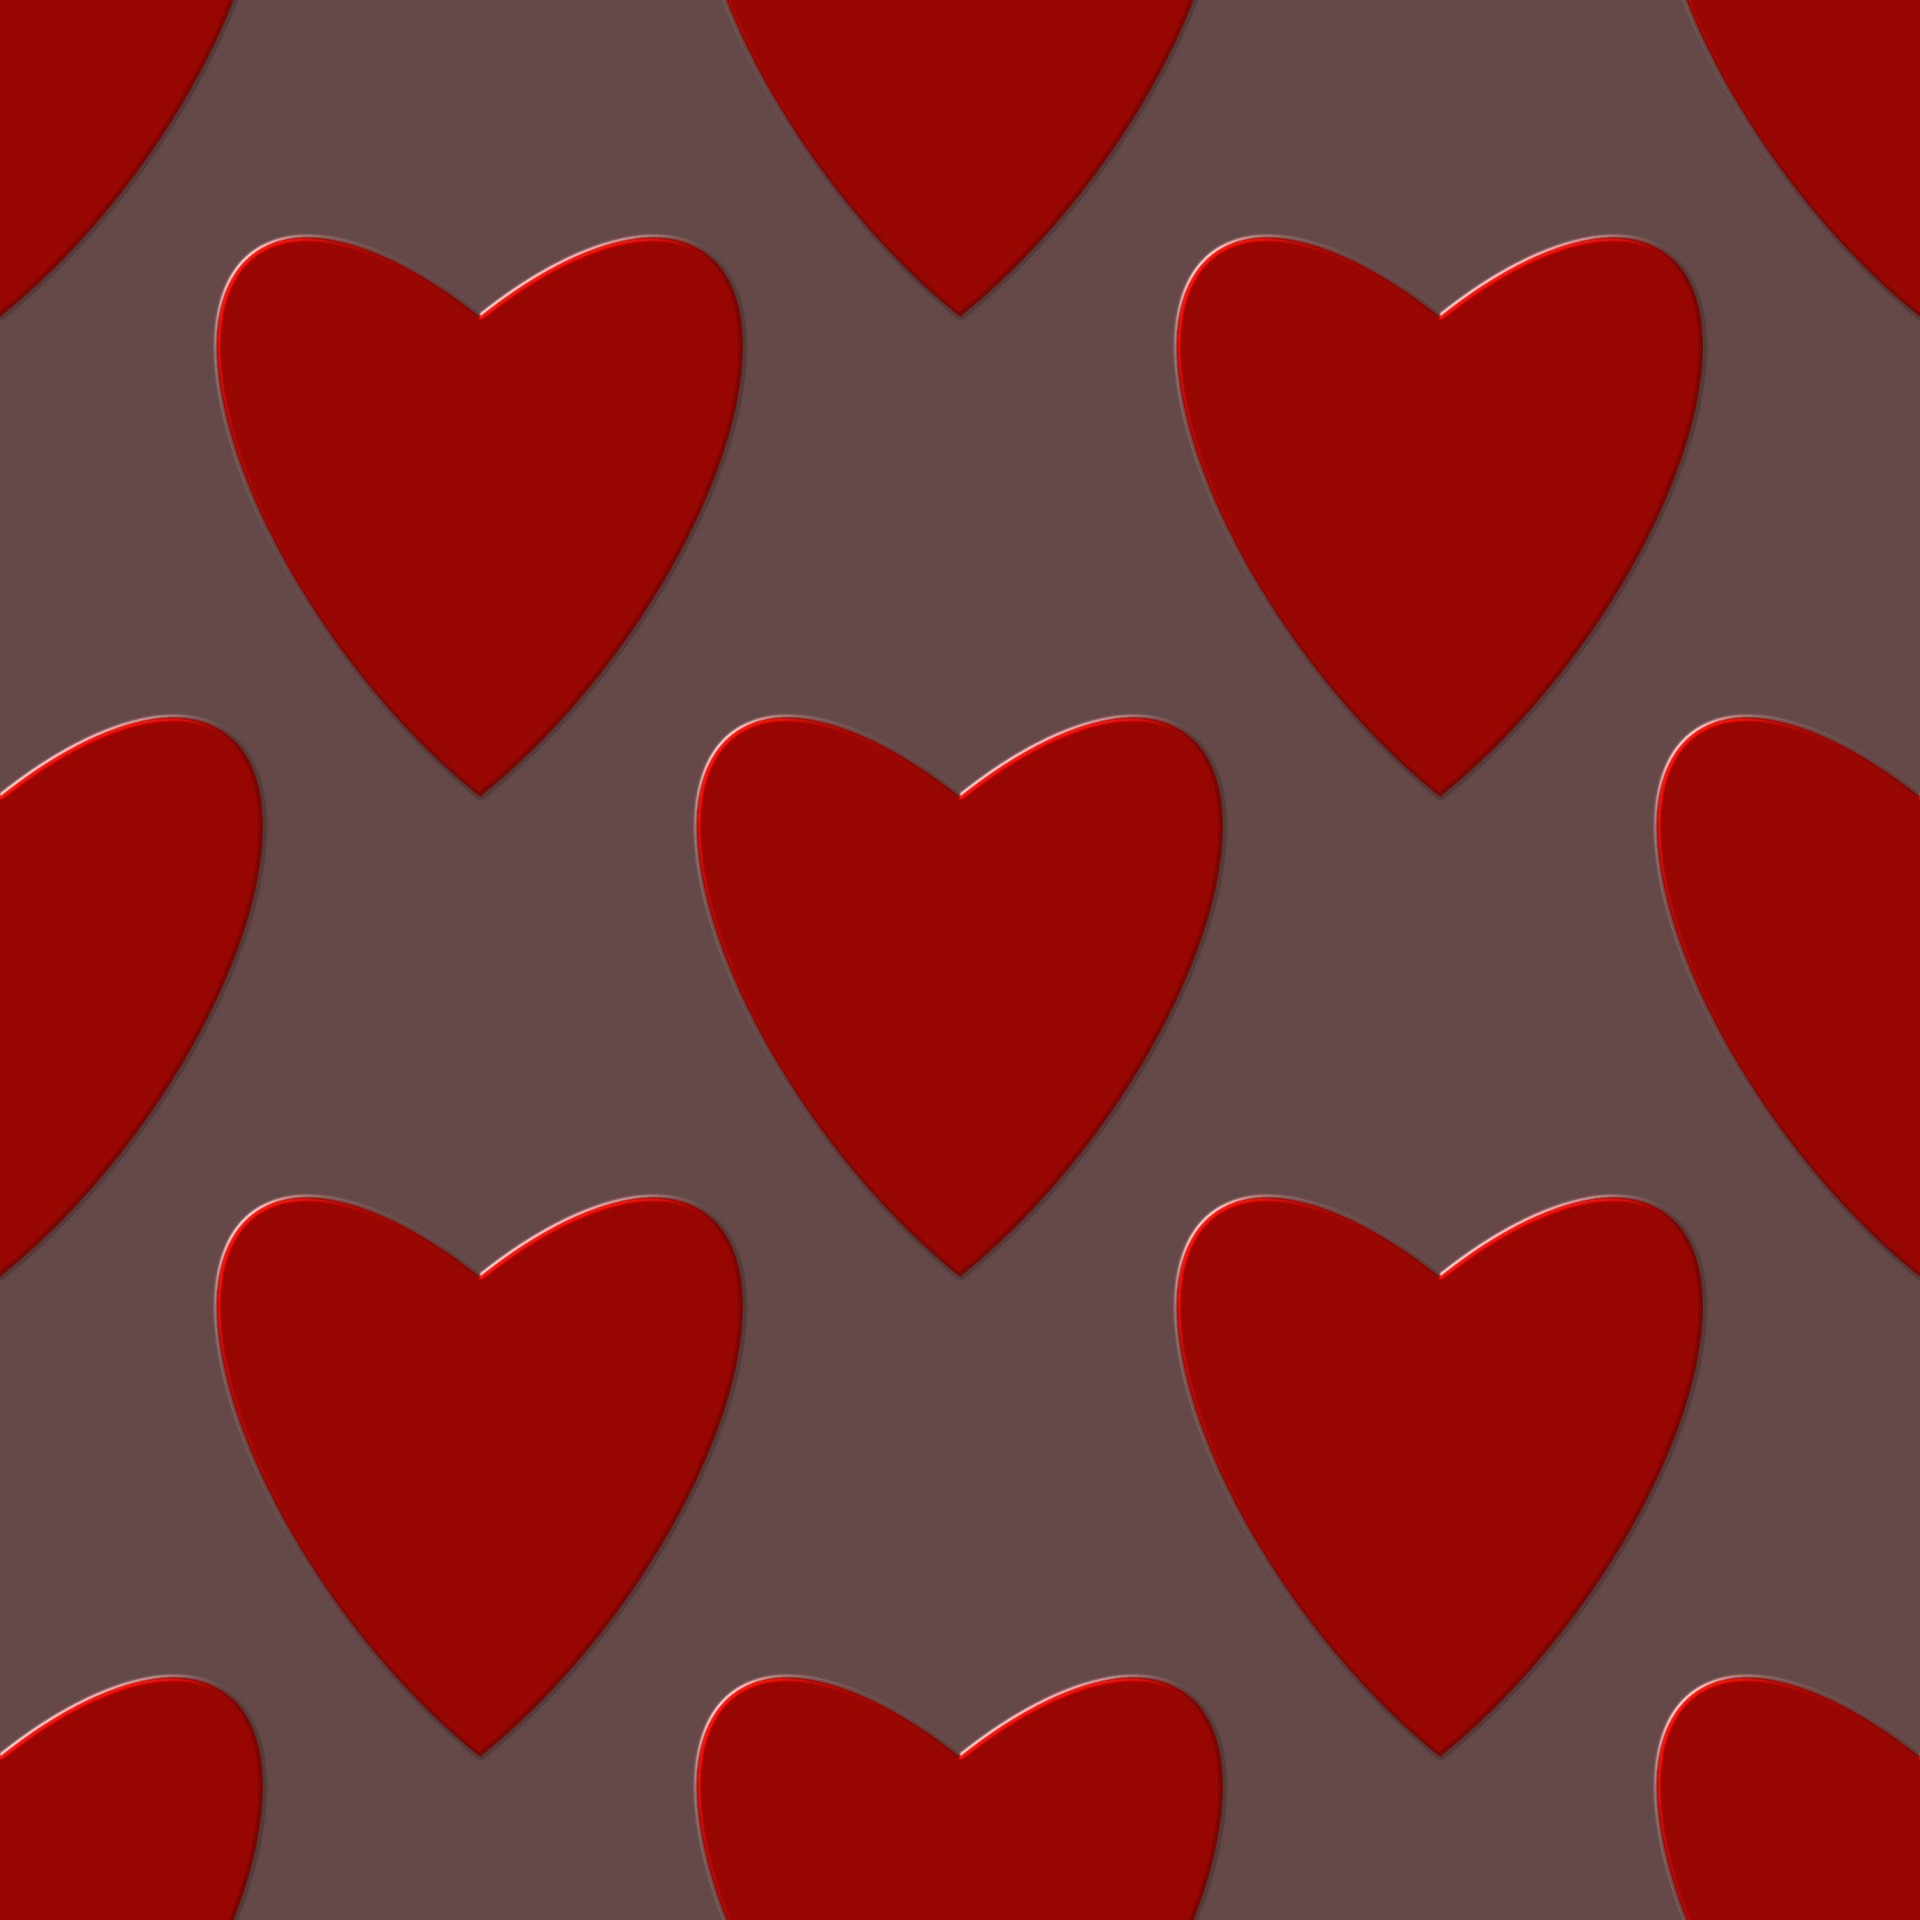 Checker Based Hearts